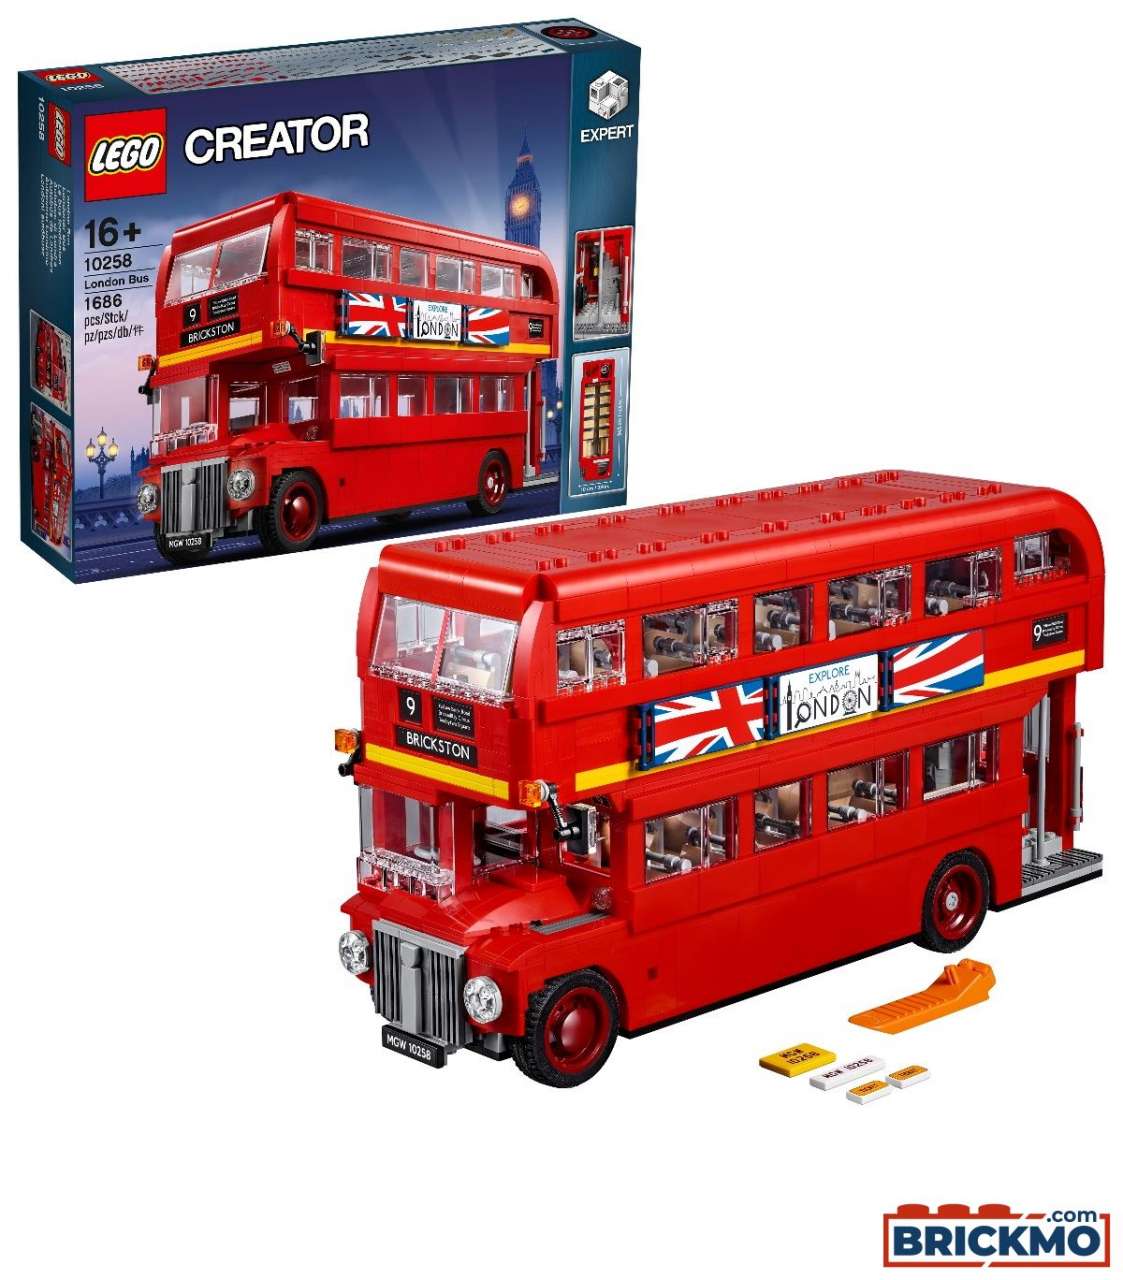 LEGO Creator 10258 London Bus 10258